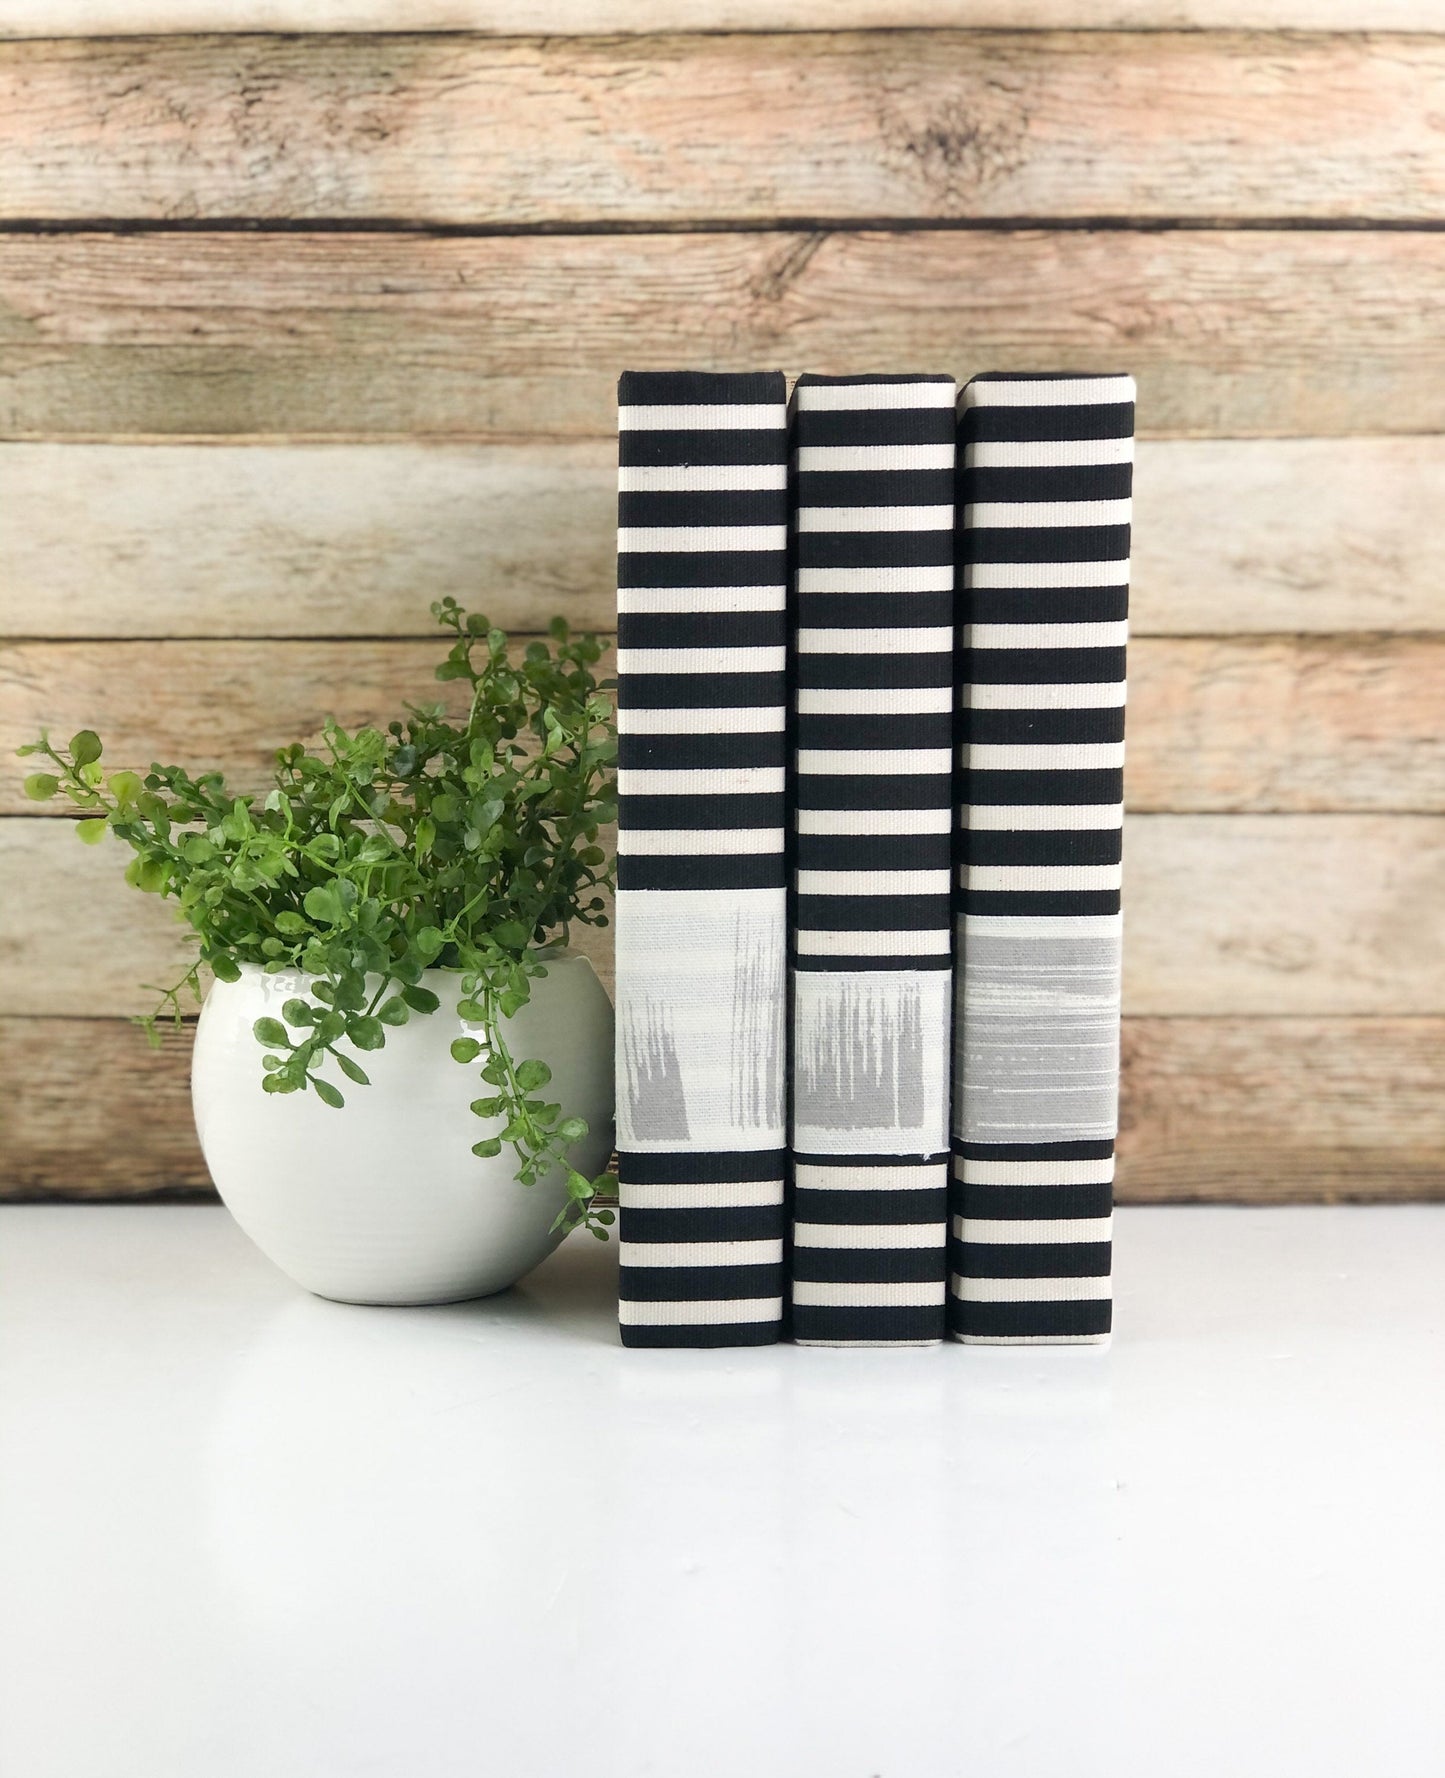 Fabric Decorative Books / Black and White